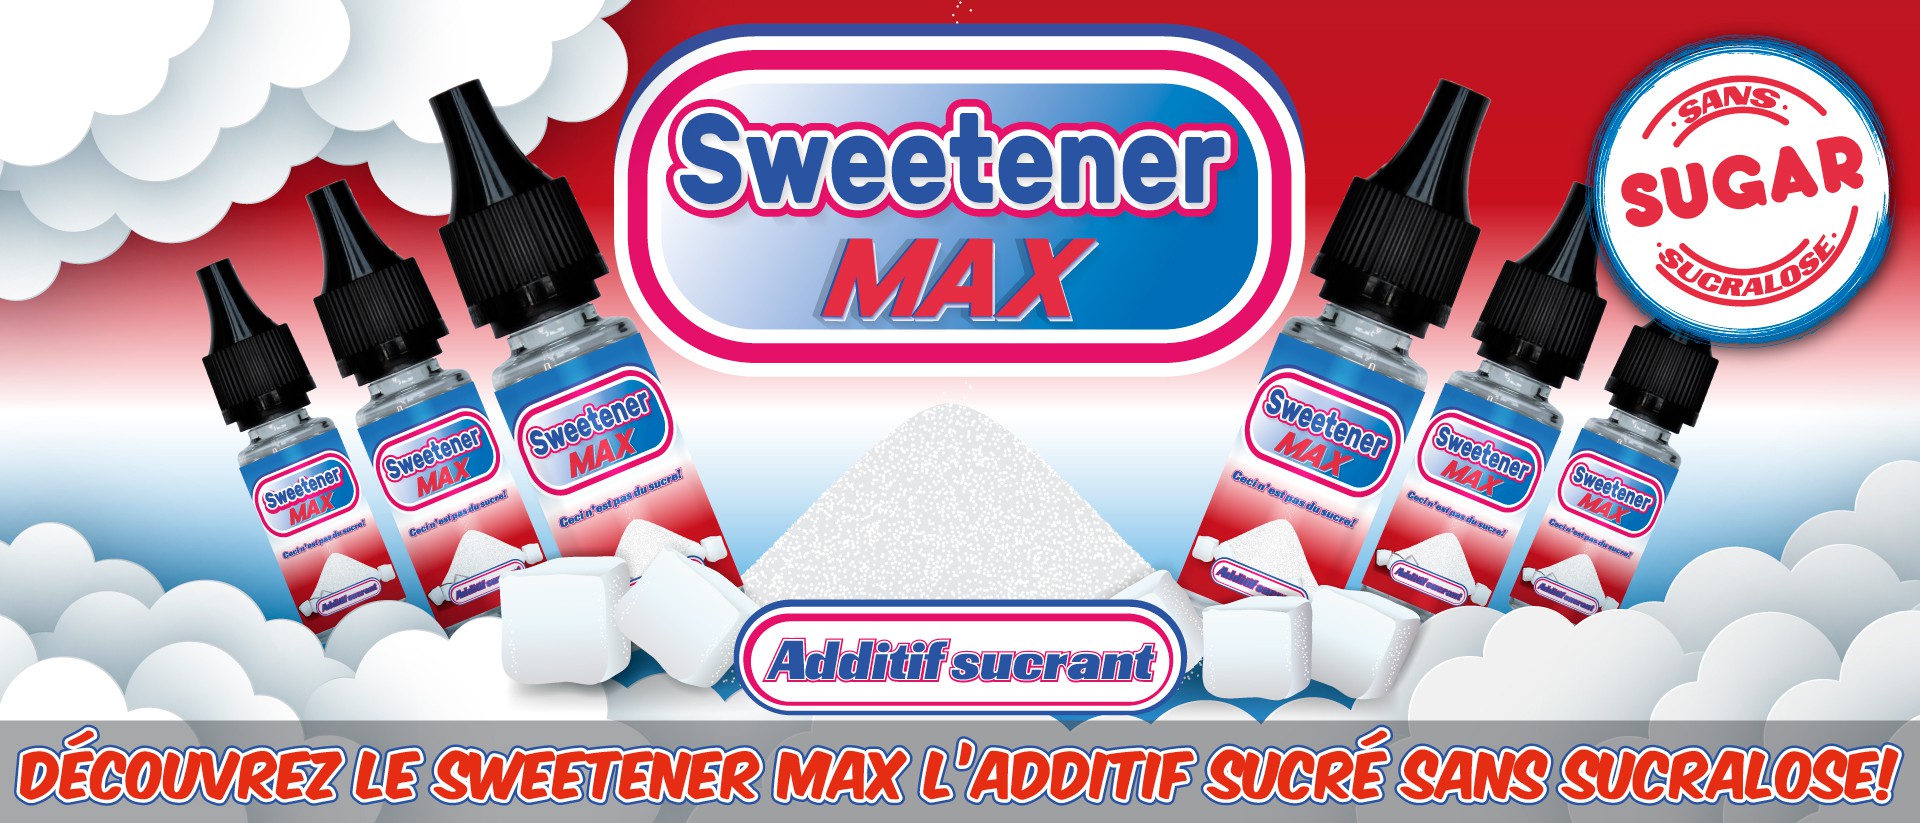 Sweetener Max